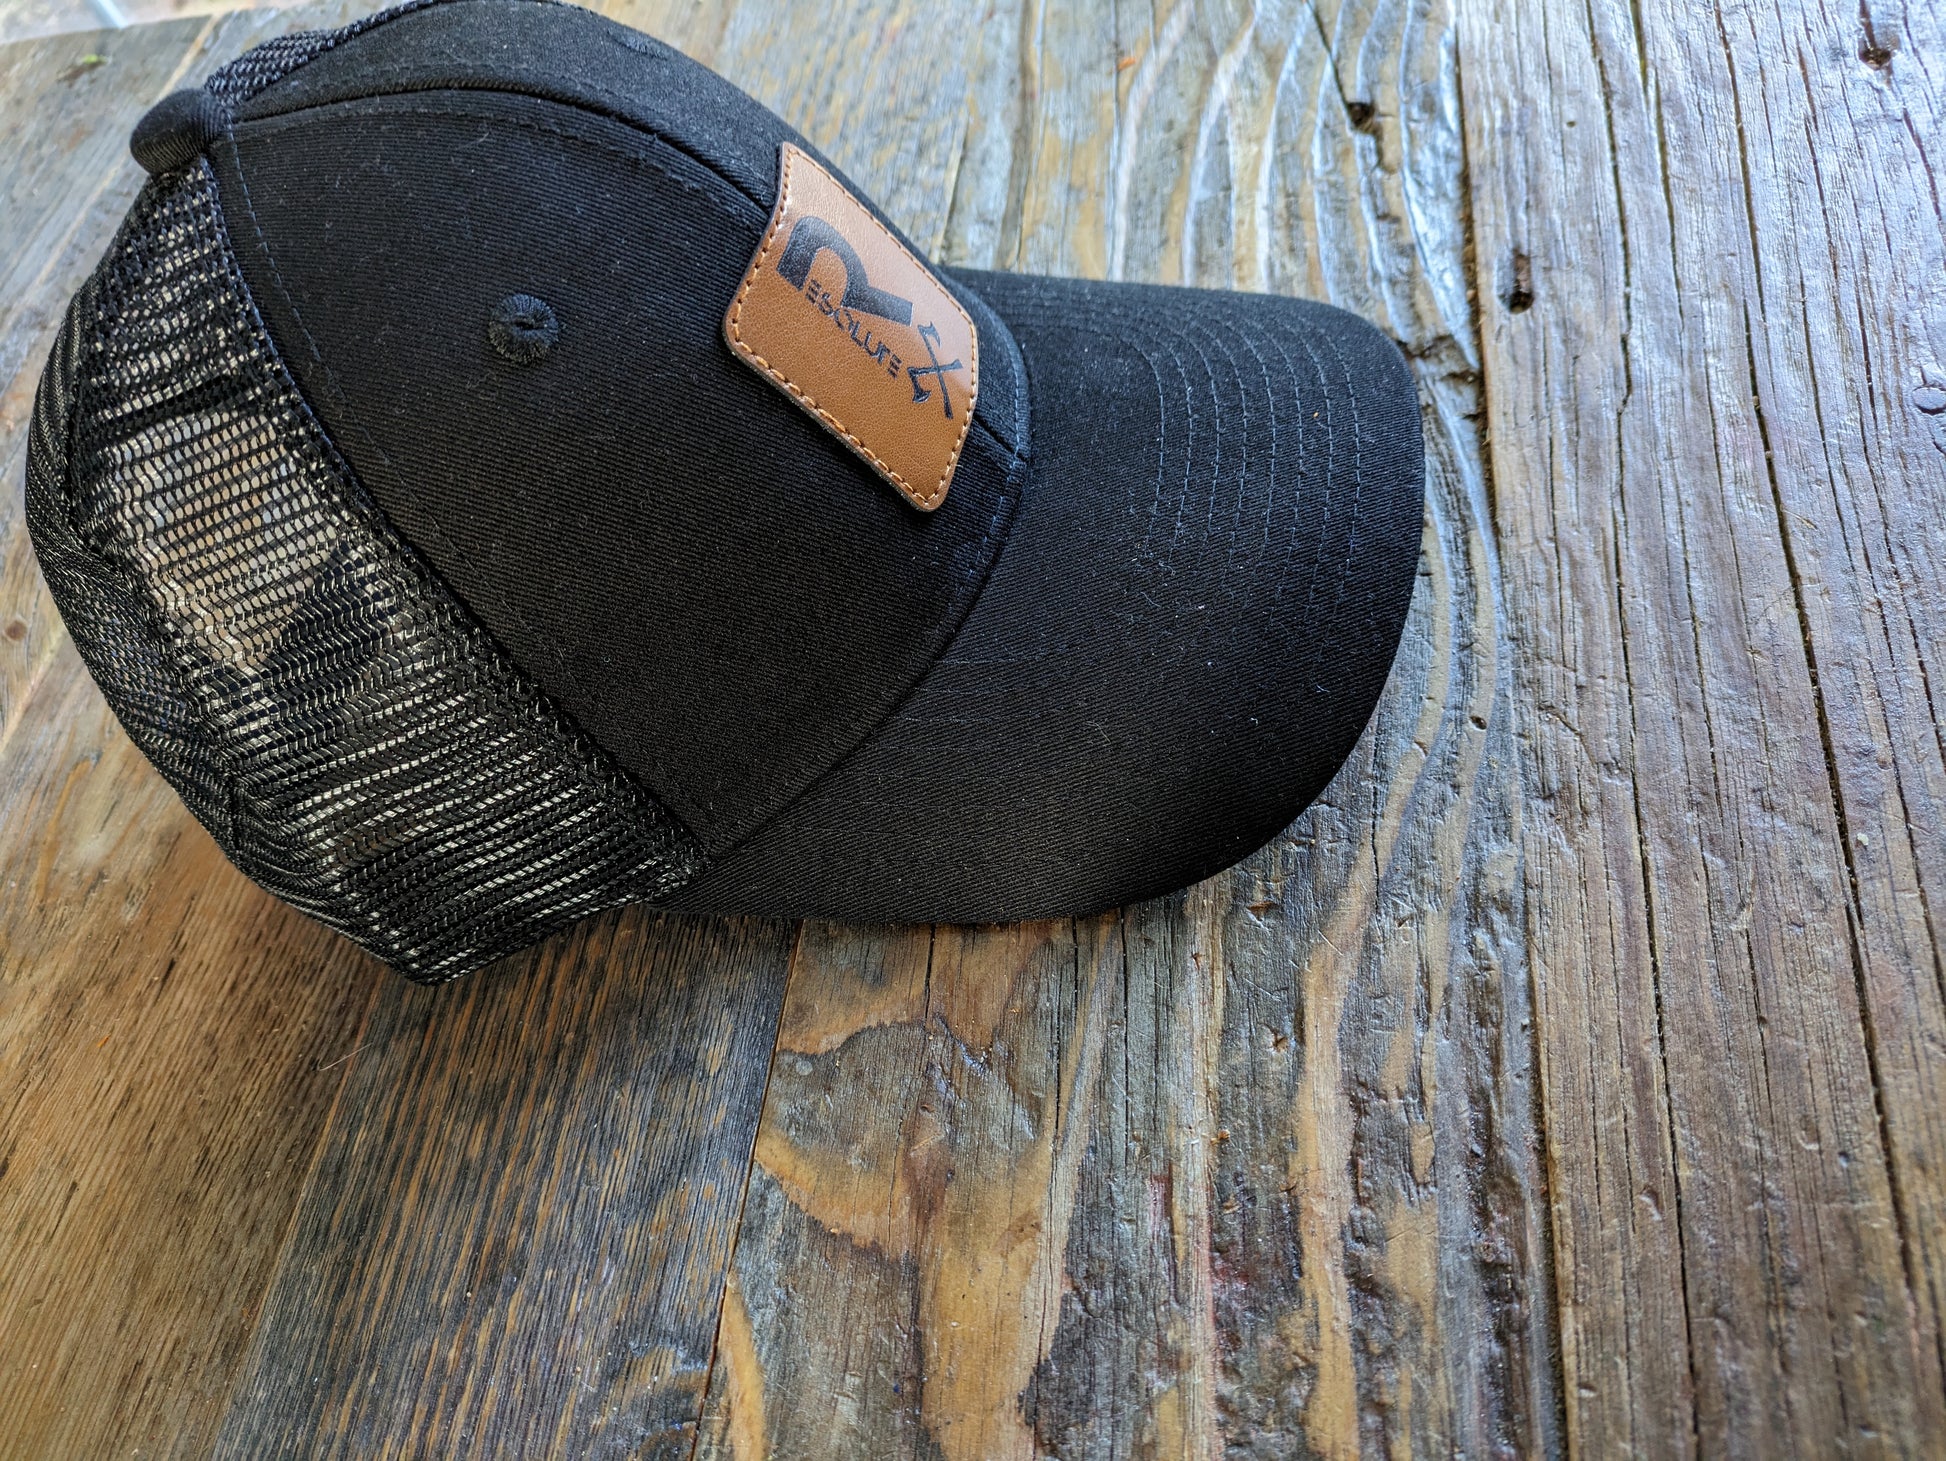 New Era Trucker Hat - Resolute Strength Wear